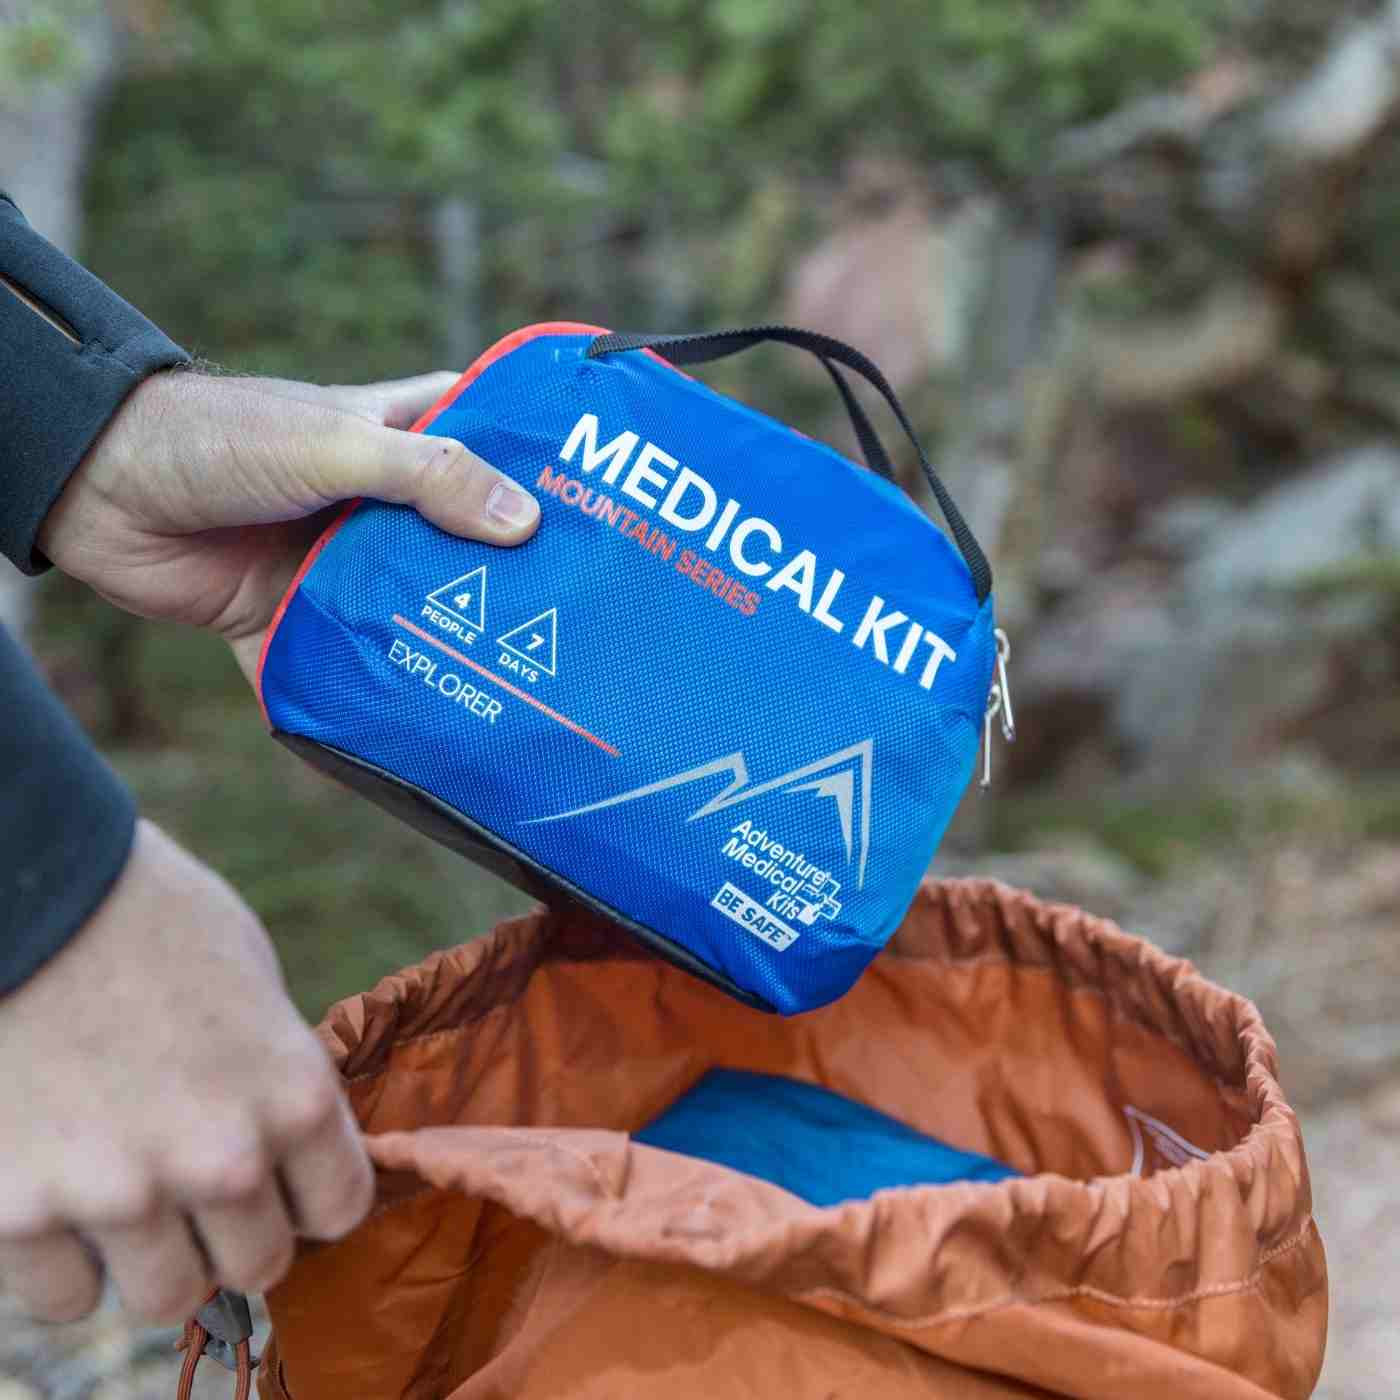 Mountain Series Medical Kit - Explorer pulling kit from orange backpack